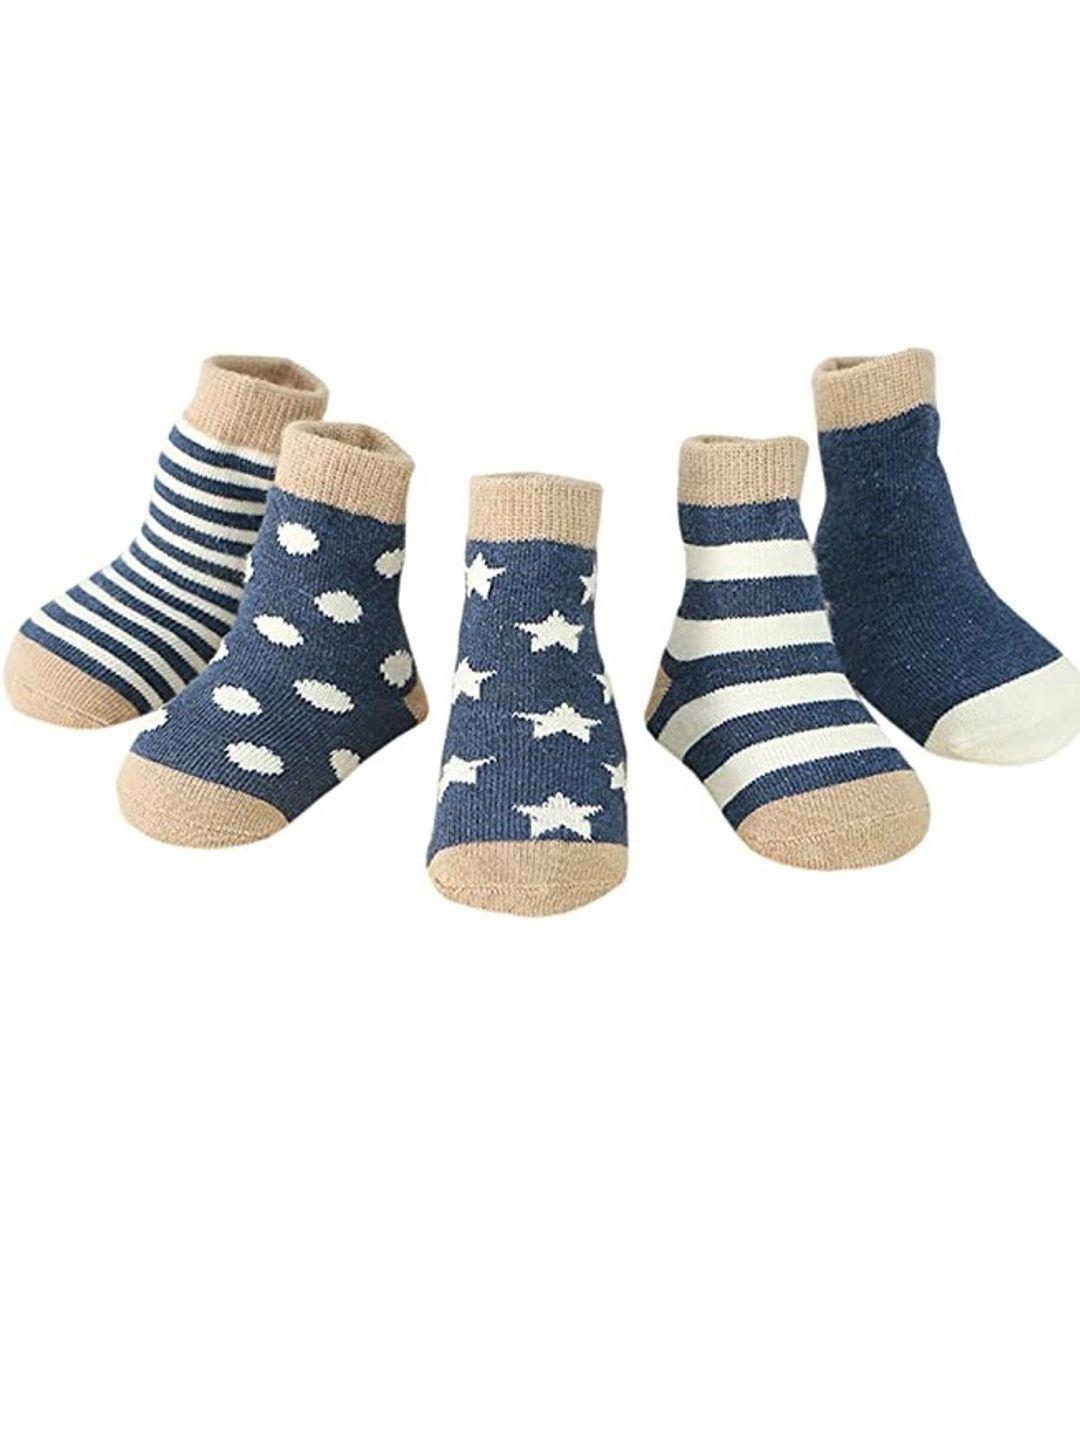 el regalo kids pack of 5 patterned calf length socks